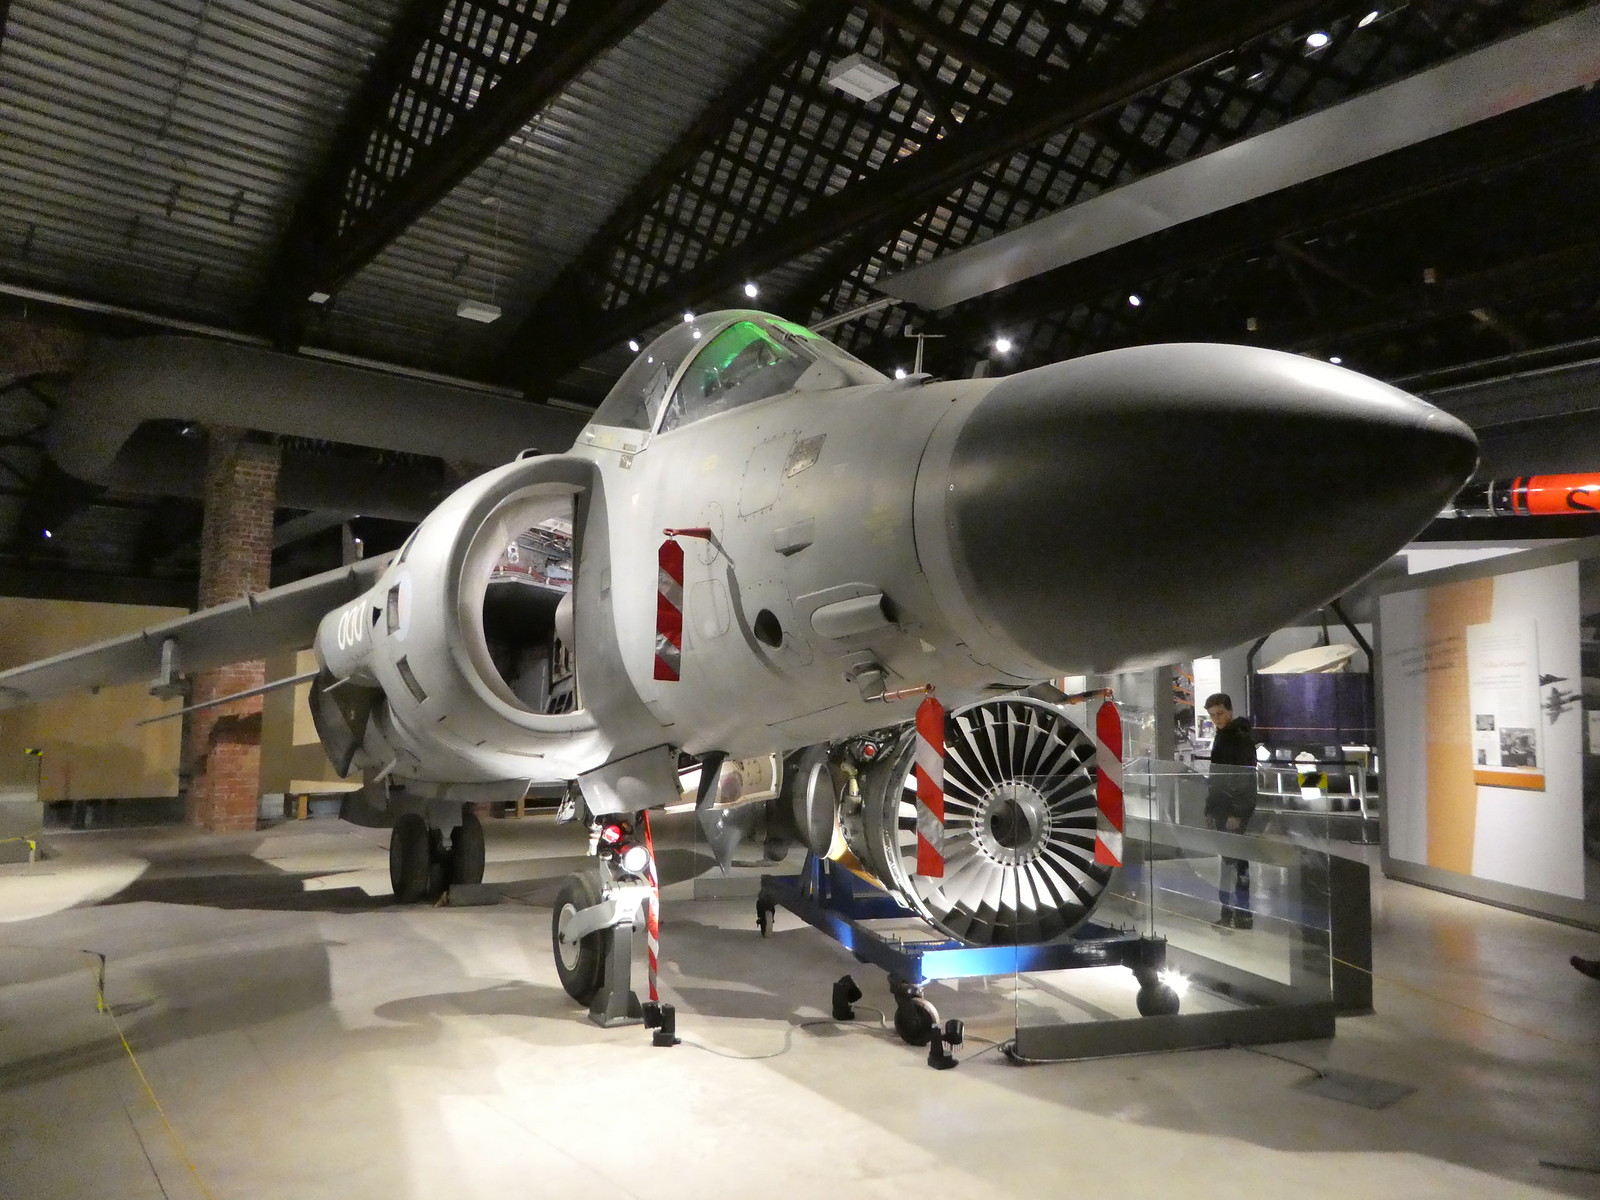 Sea Harrier Jet Fighter at Aerospace Bristol